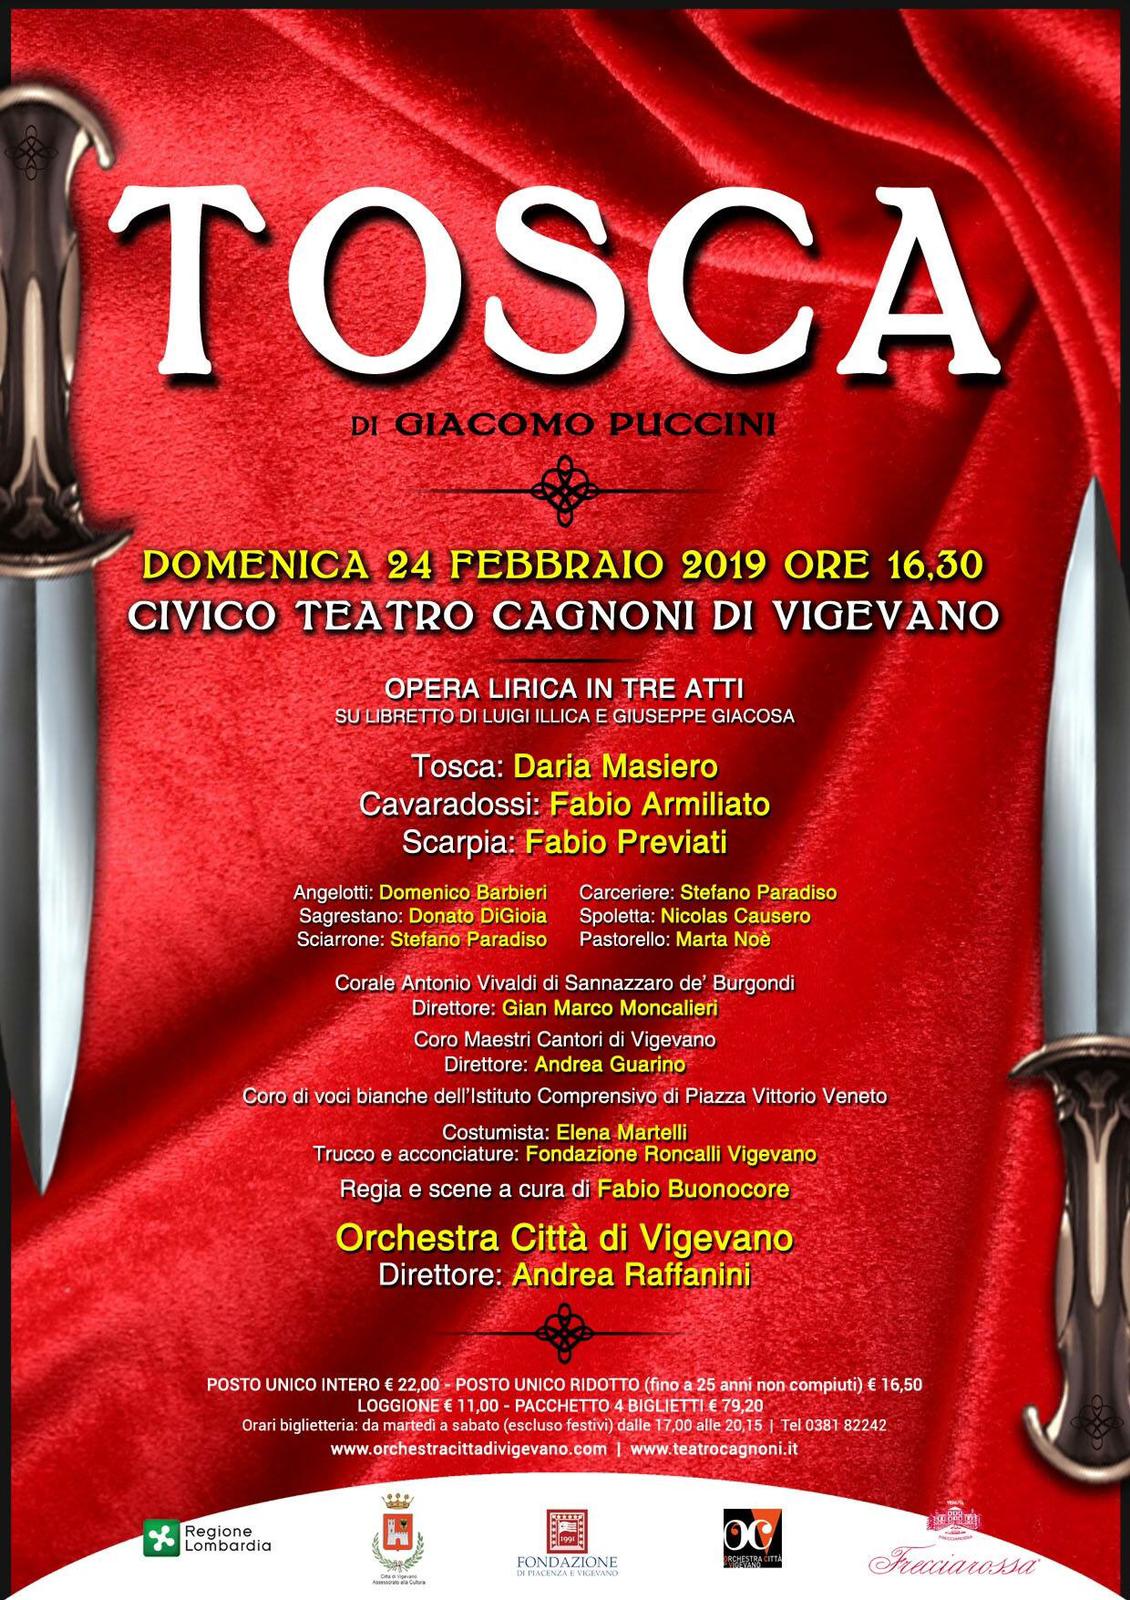 Tosca Teatro Cagnoni Vigevano 24 Febbraio 2019